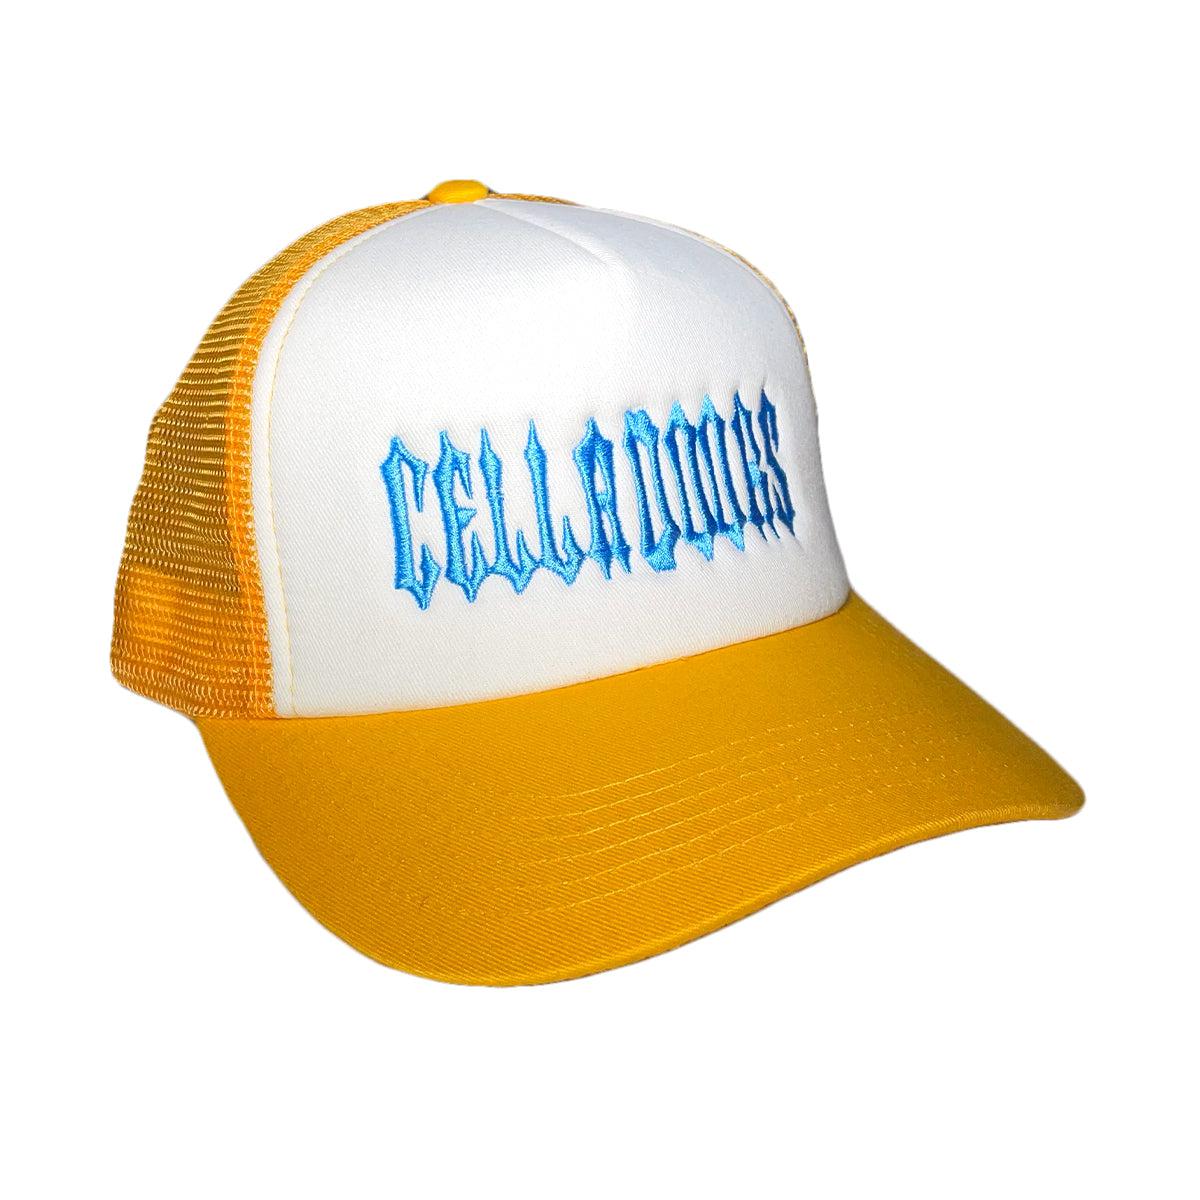 CELLADOORS - 卡車司機帽/黃色